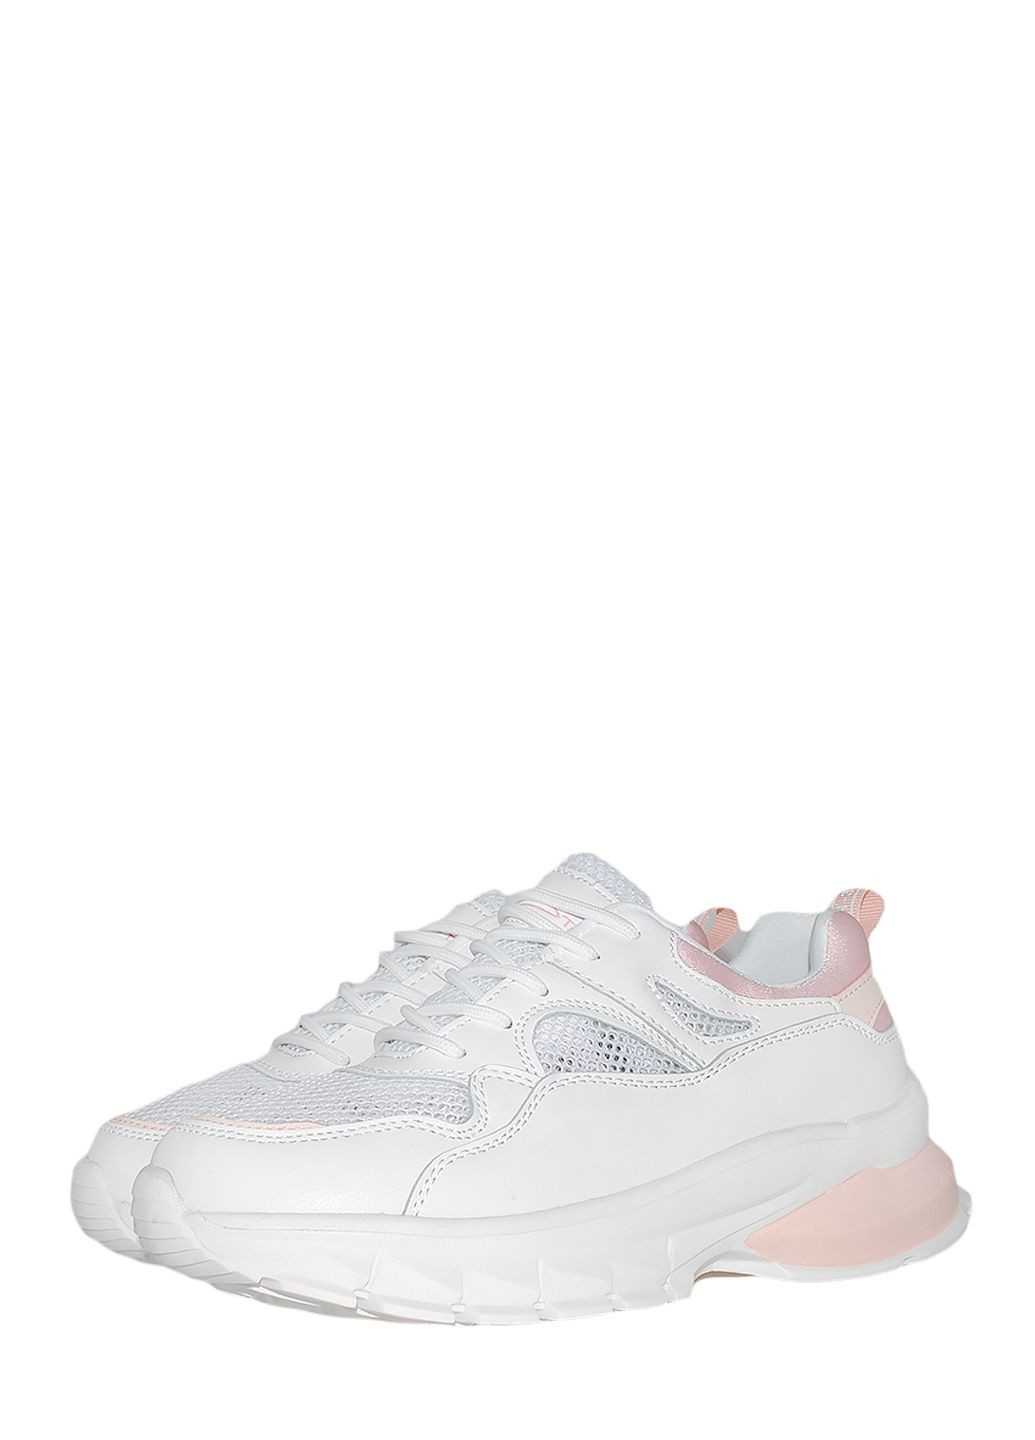 Білі осінні кросівки st3600-8 white-pink Stilli